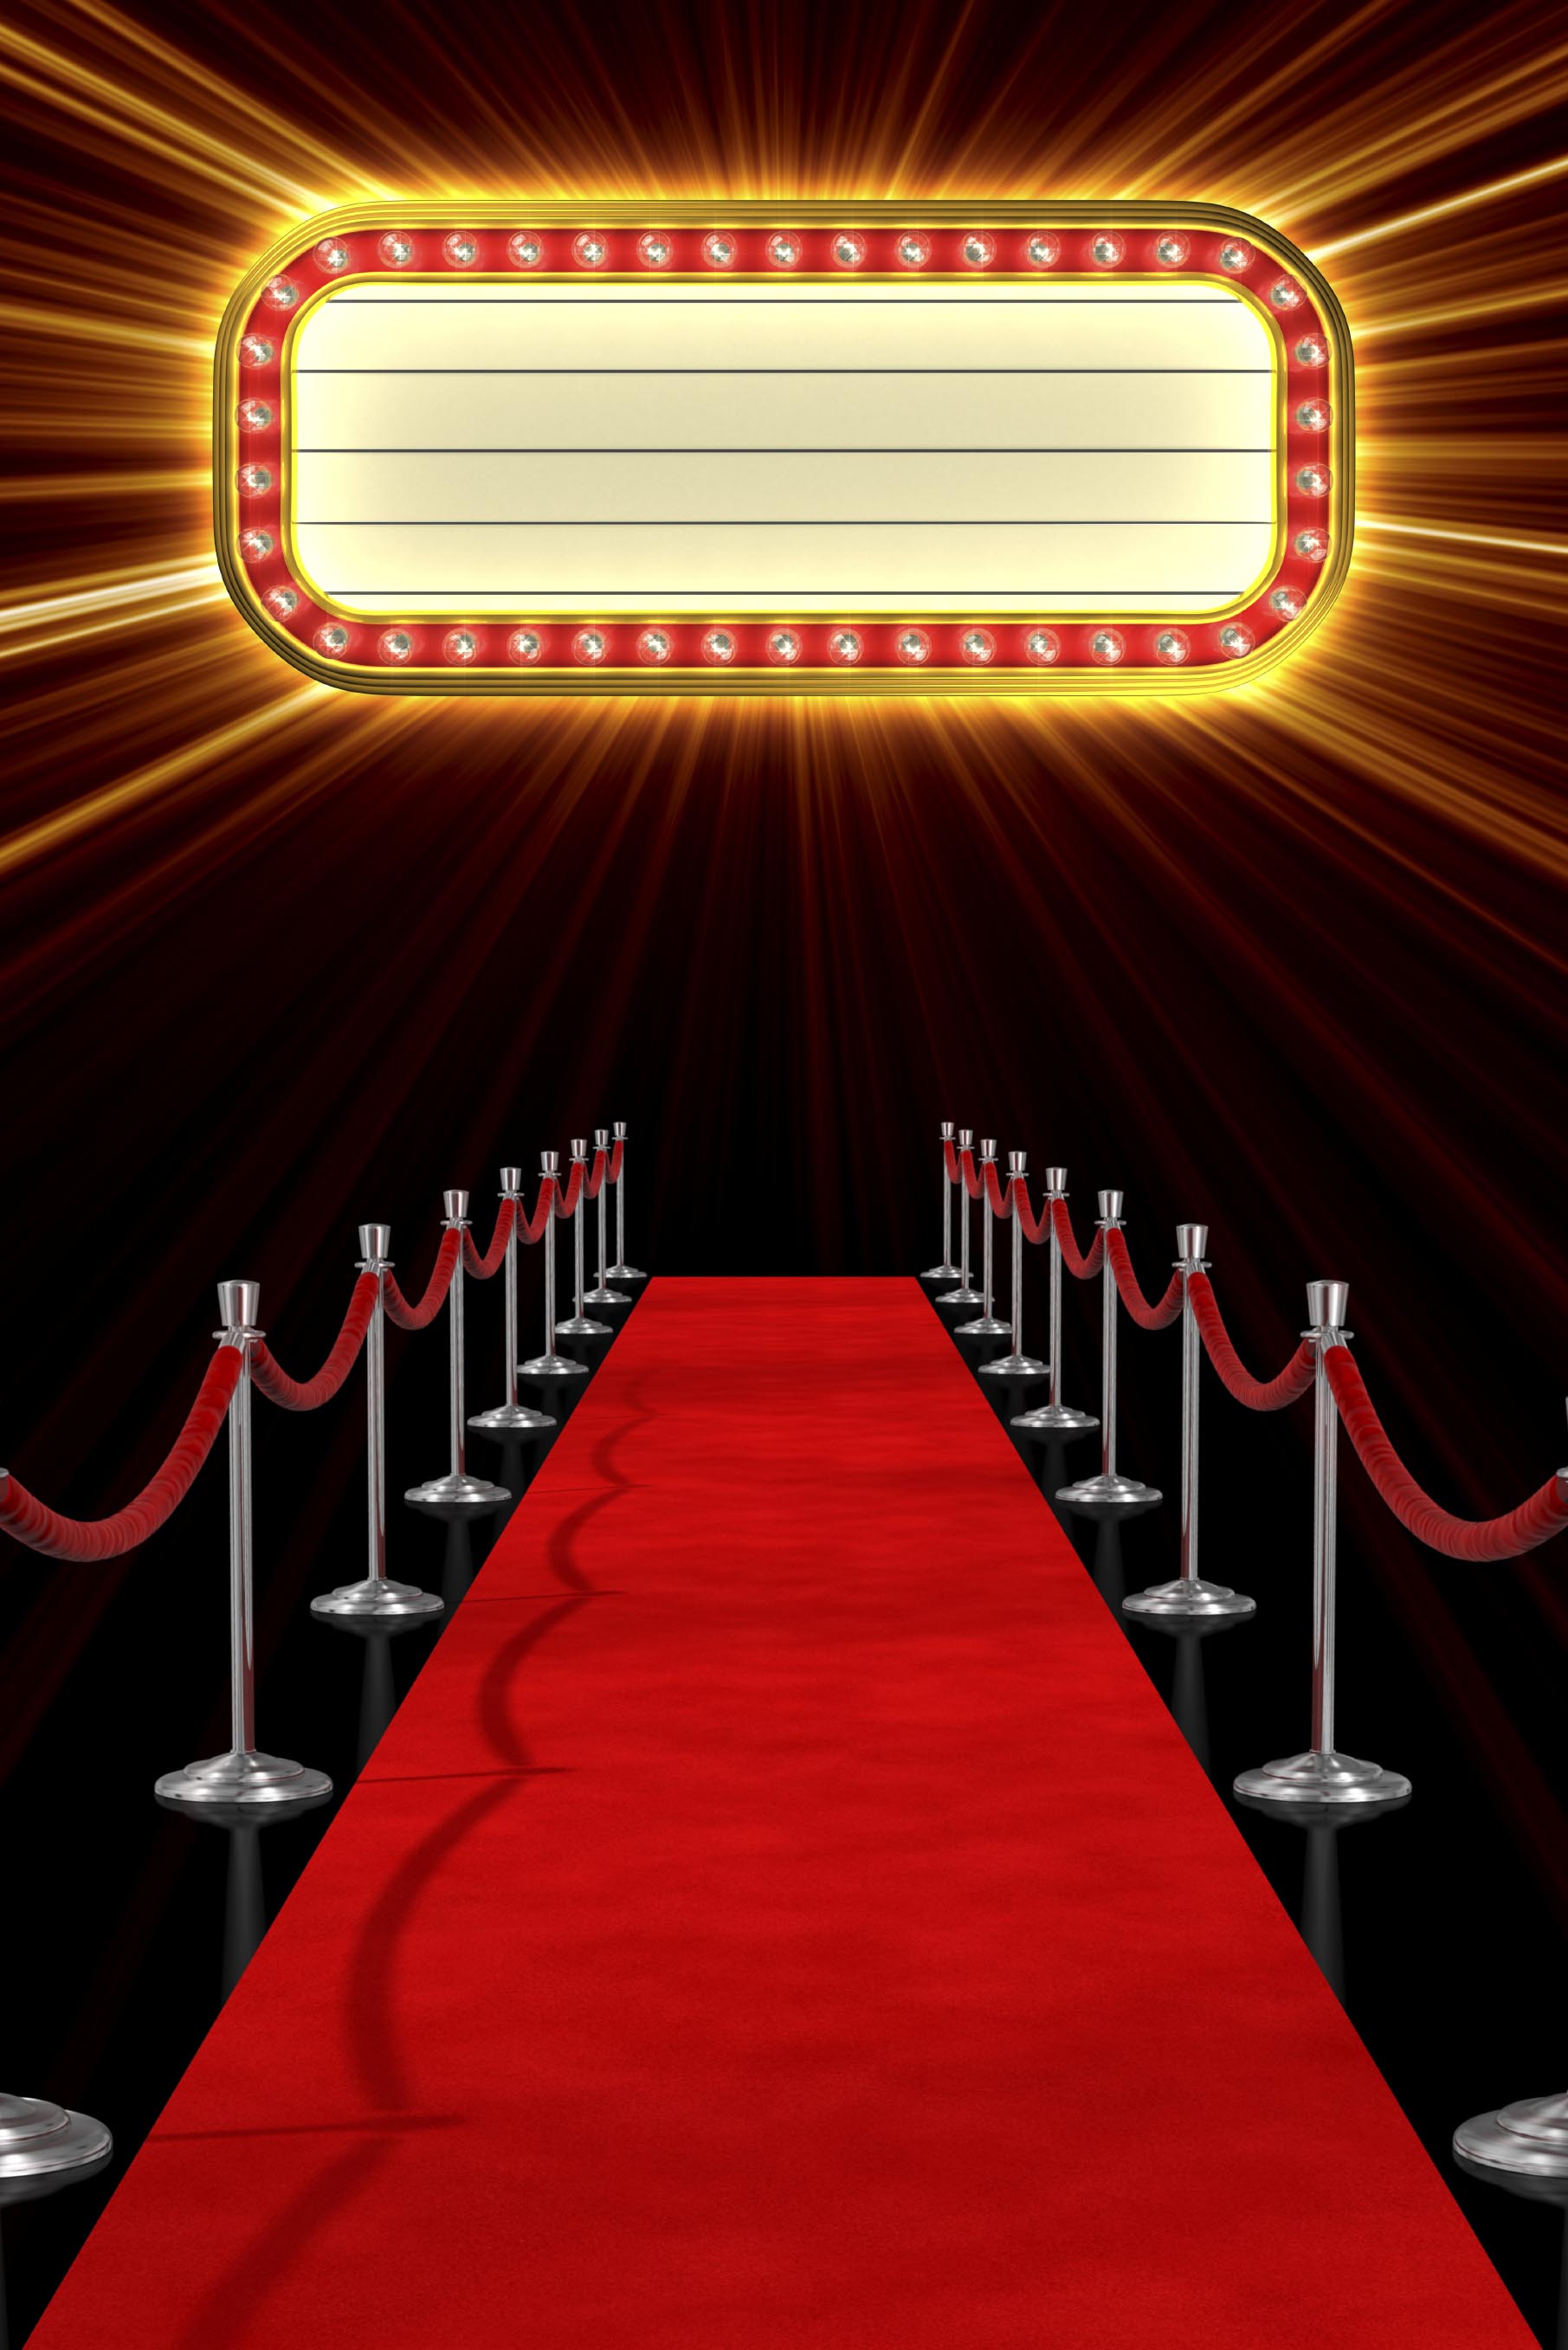 Celebrity Red Carpet Background HD Image 3 HD Wallpaper